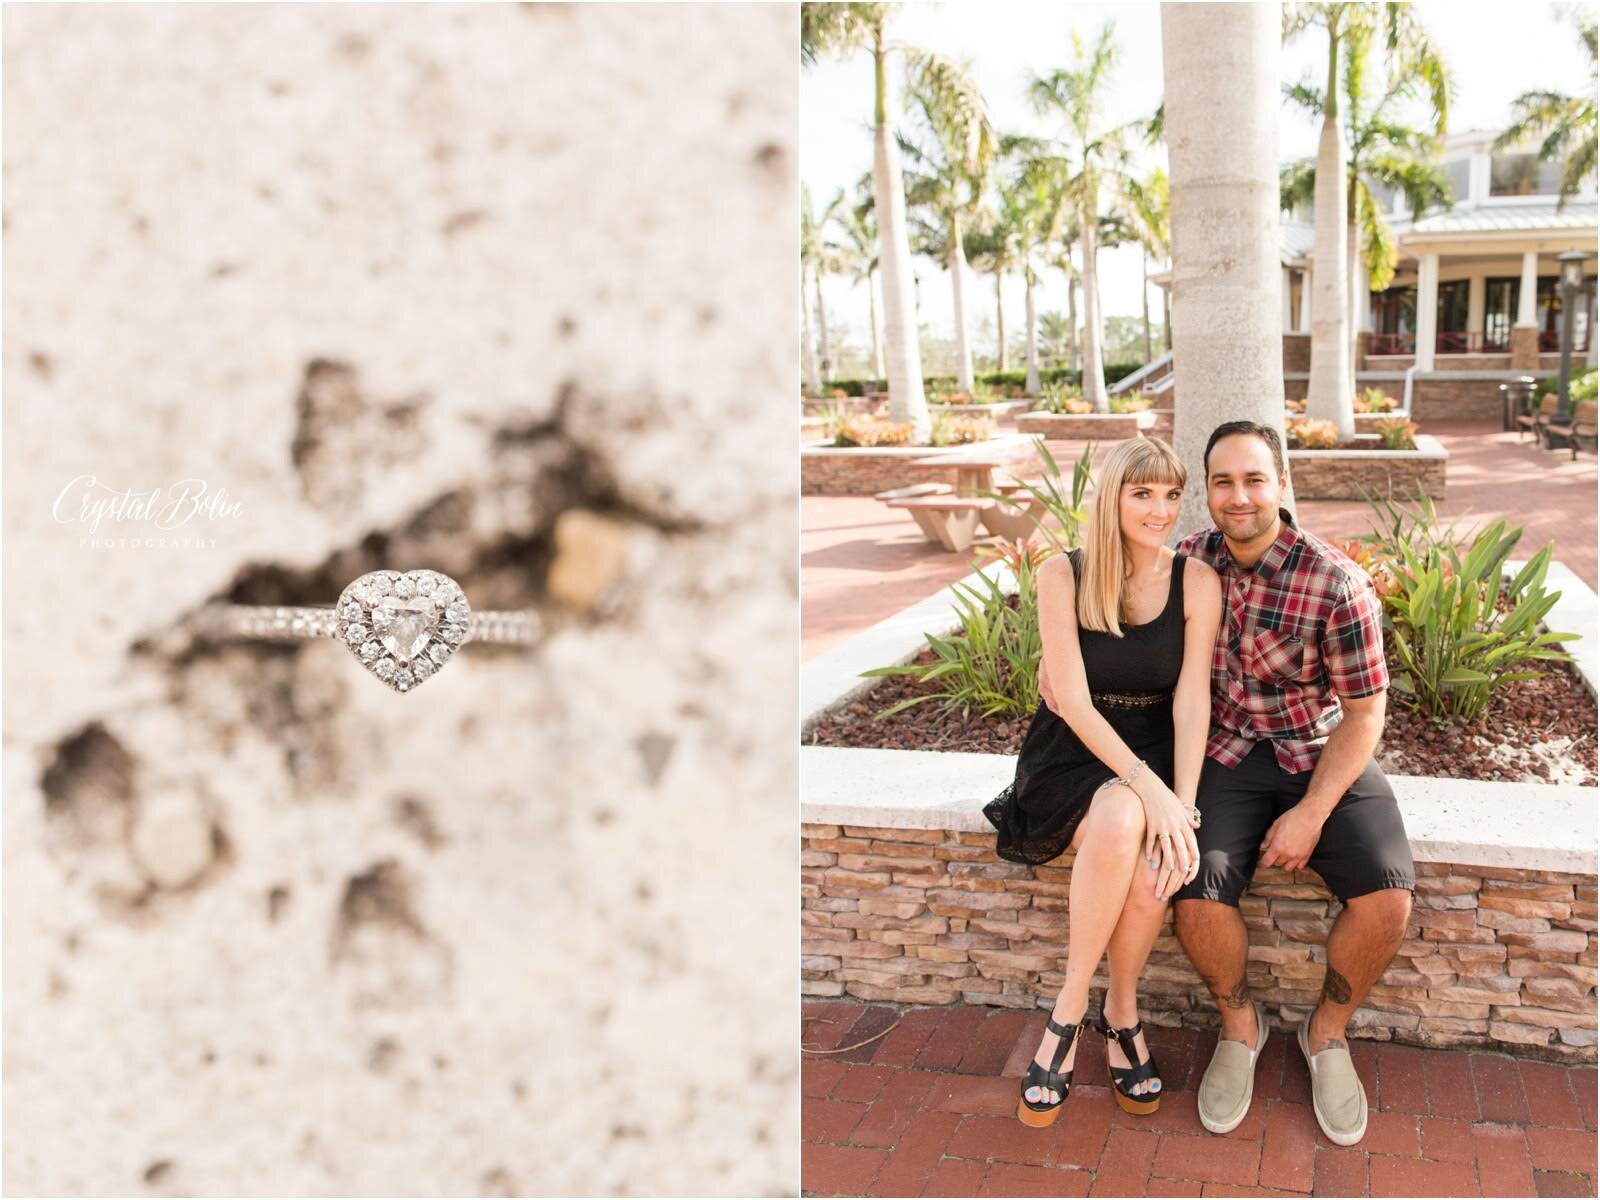 Brandy & Chris | Engagement Photos